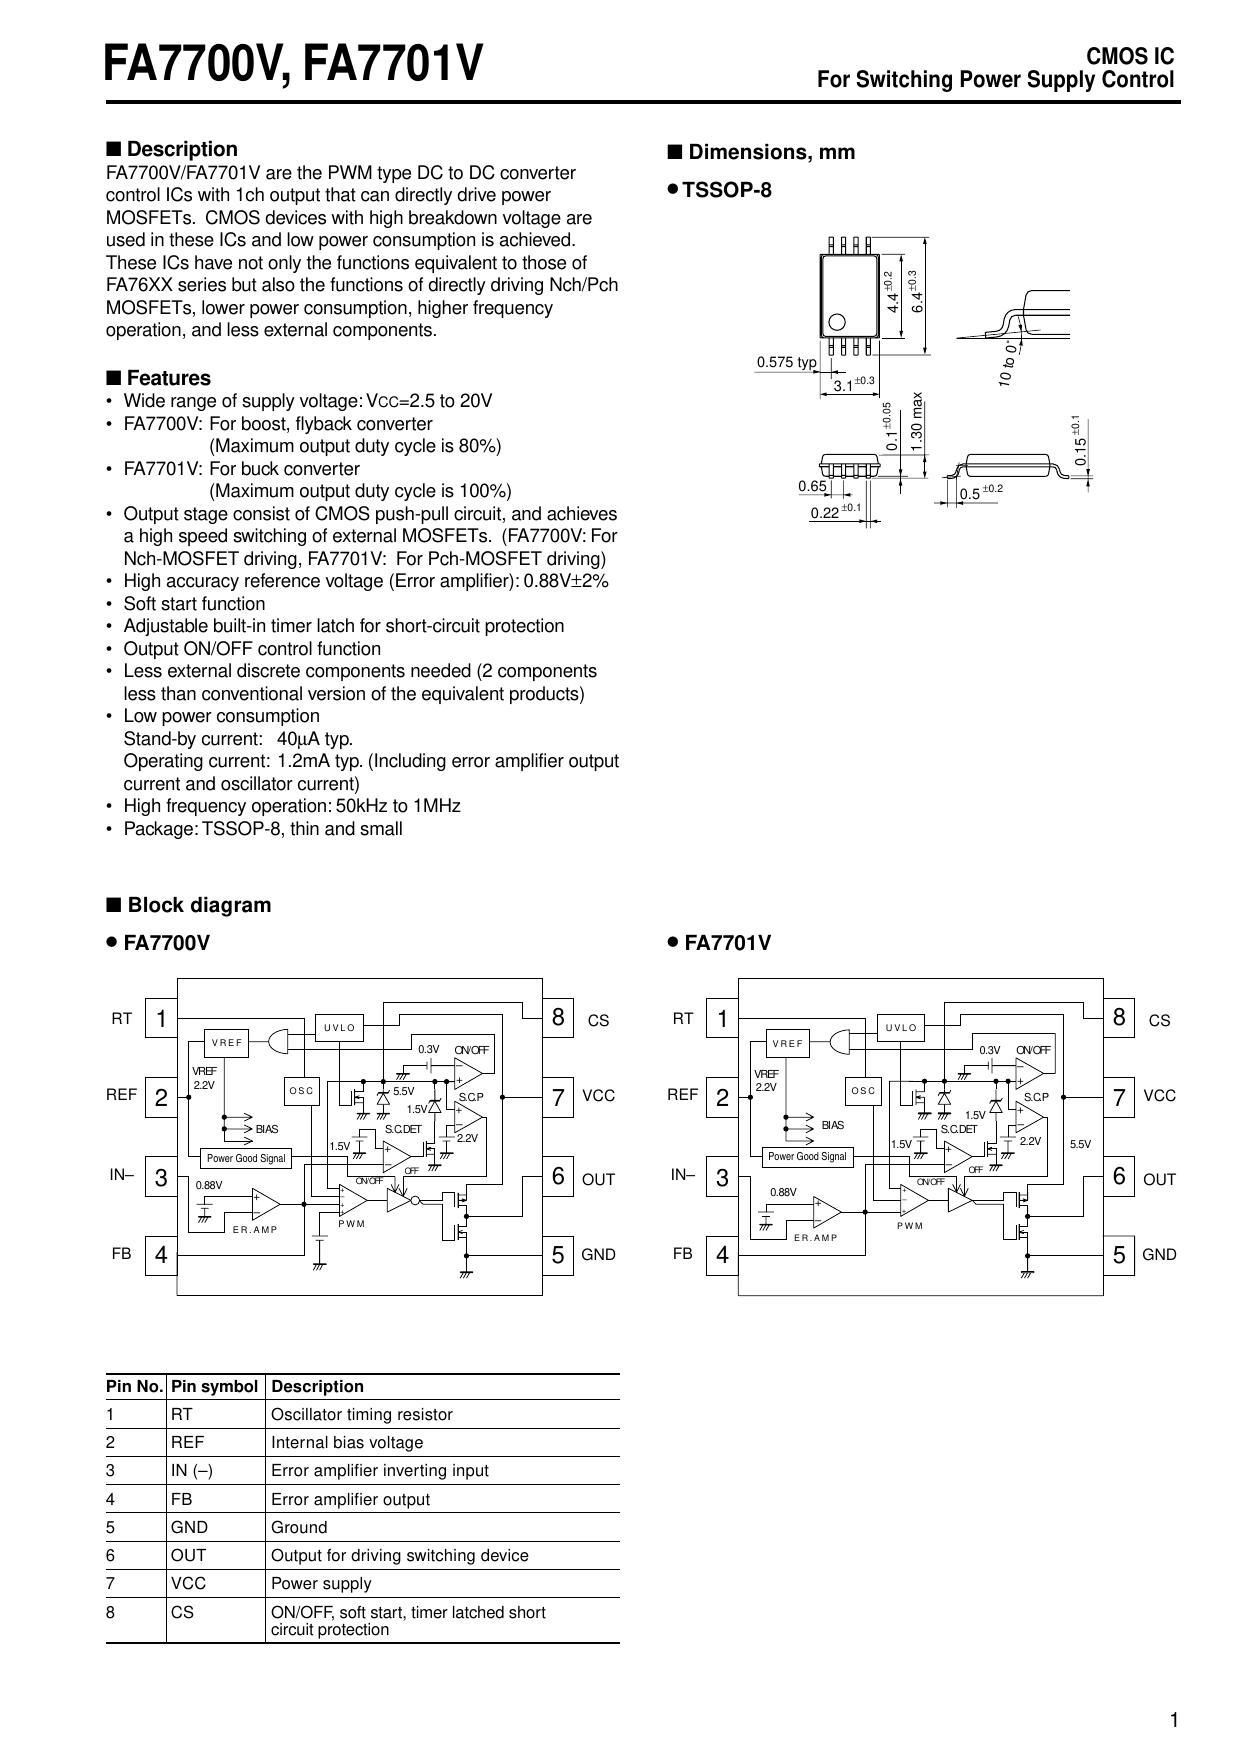 faz7oov-fazzo1v-cmos-ic-for-switching-power-supply-control.pdf